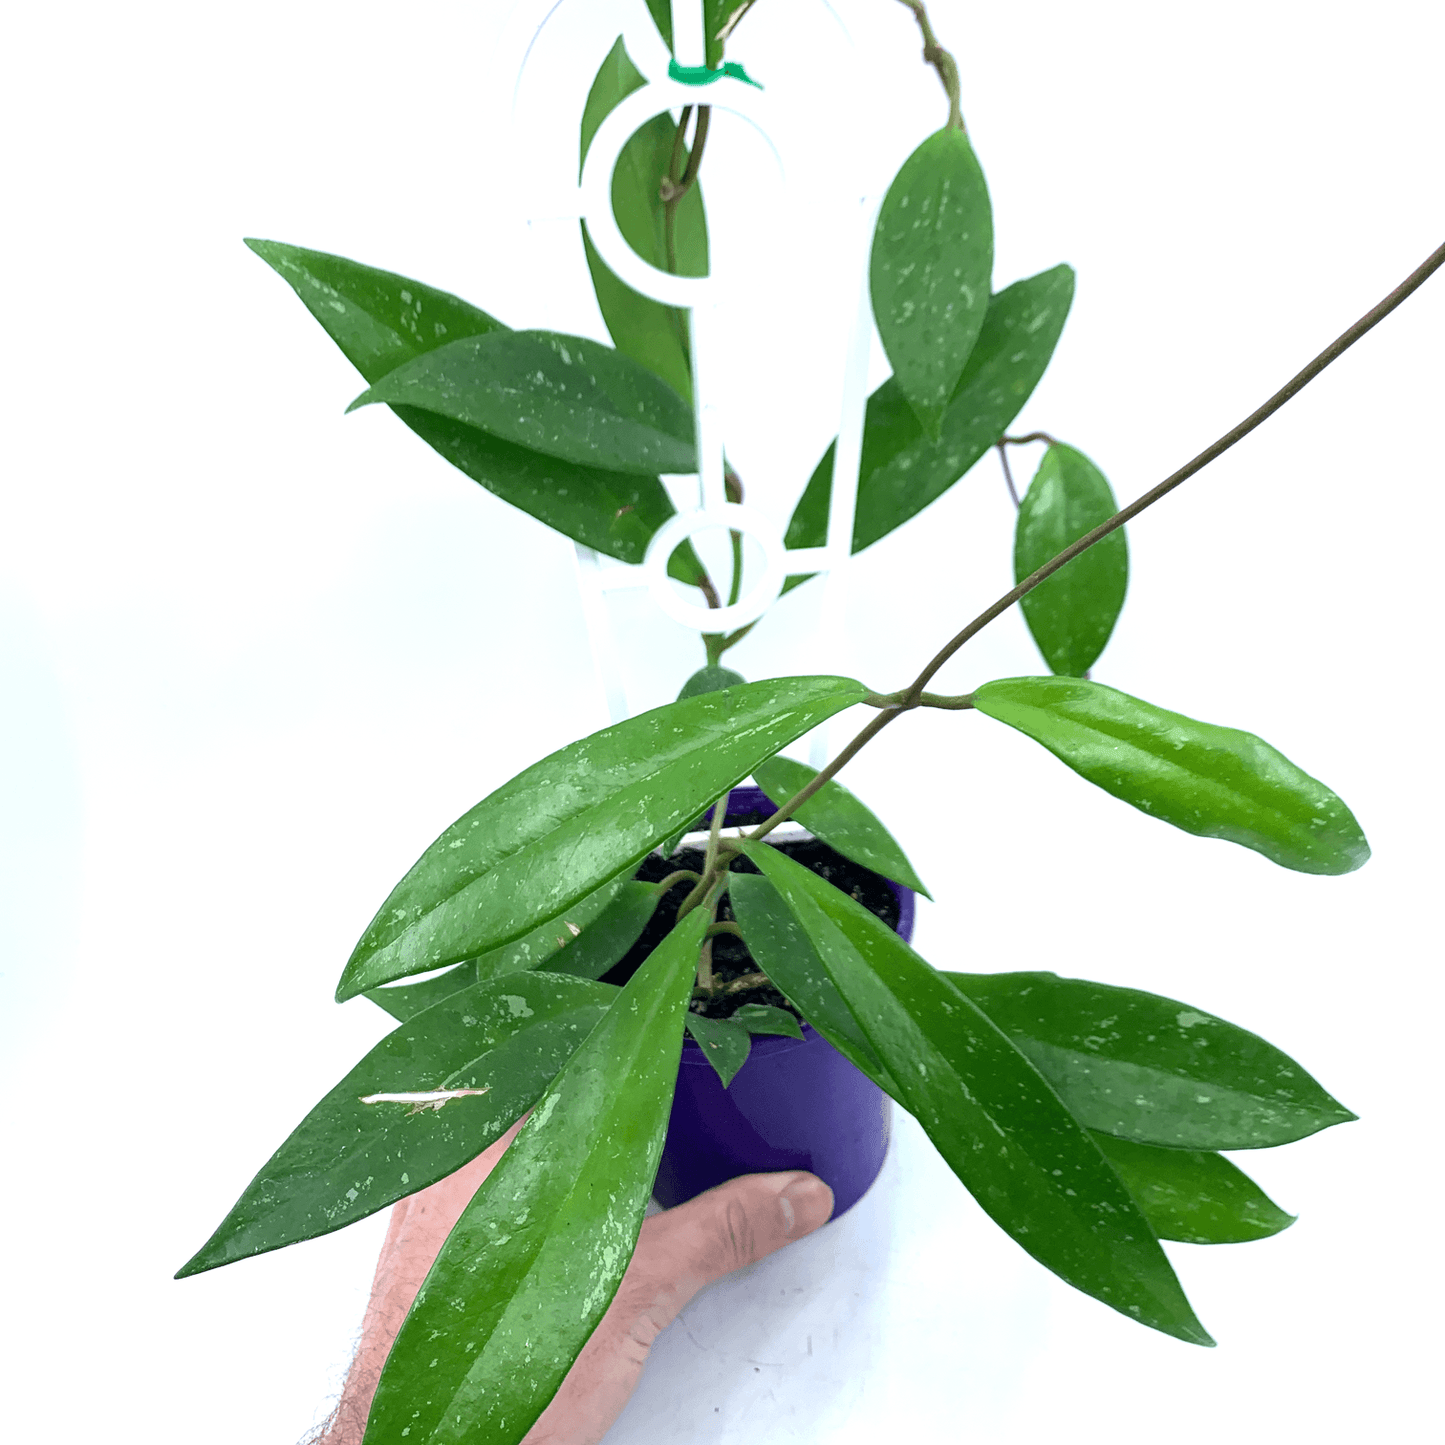 Hoya - Australis - The Plant Buddies